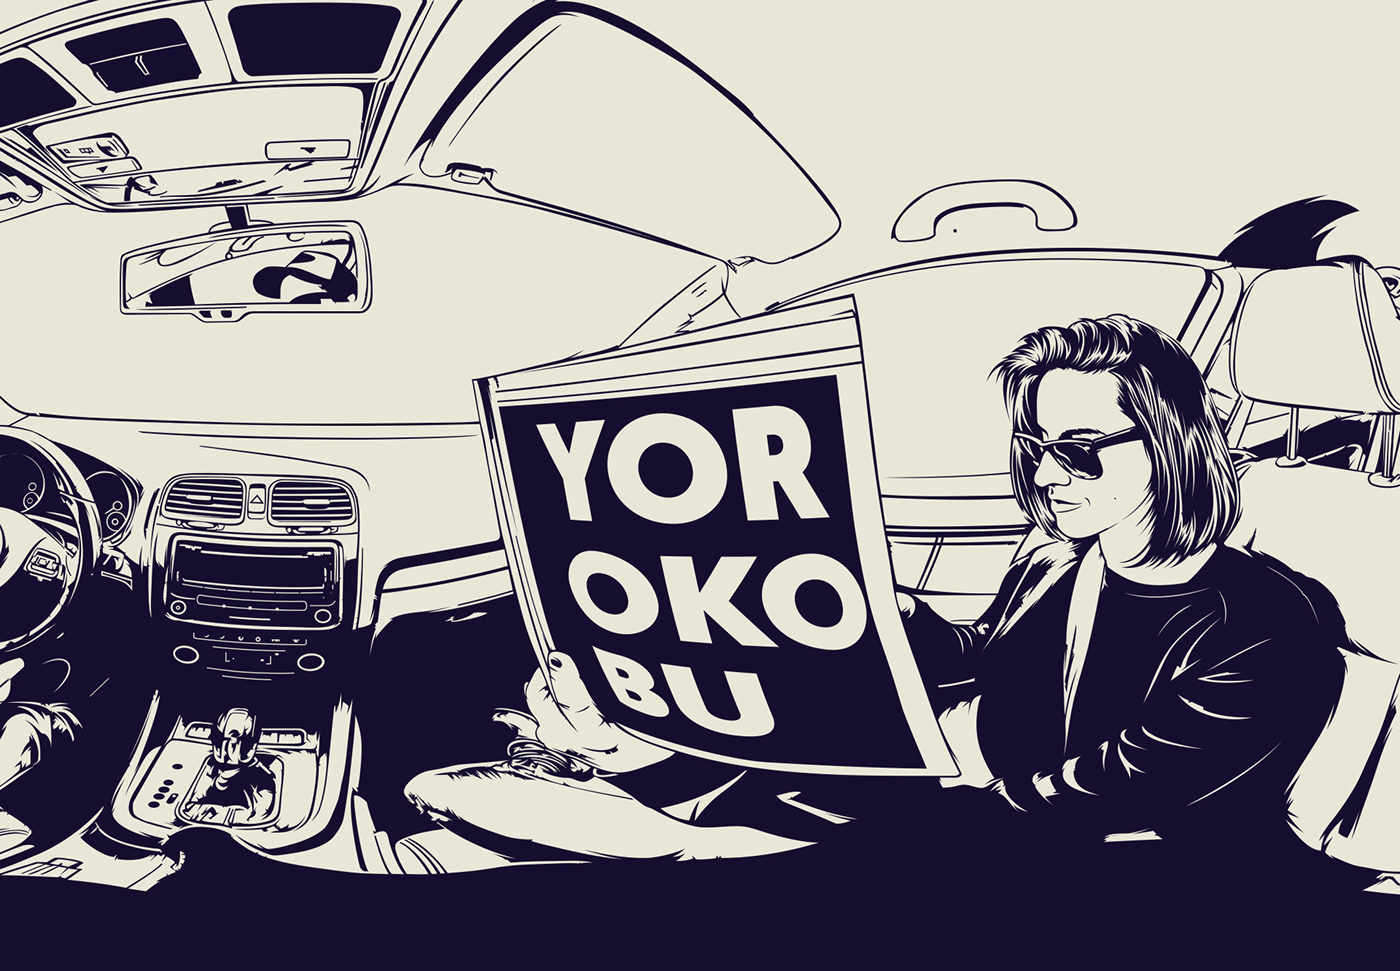 qr tour virtual scan ILLUSTRATION  yorokobu volkswagen magazine cover revista